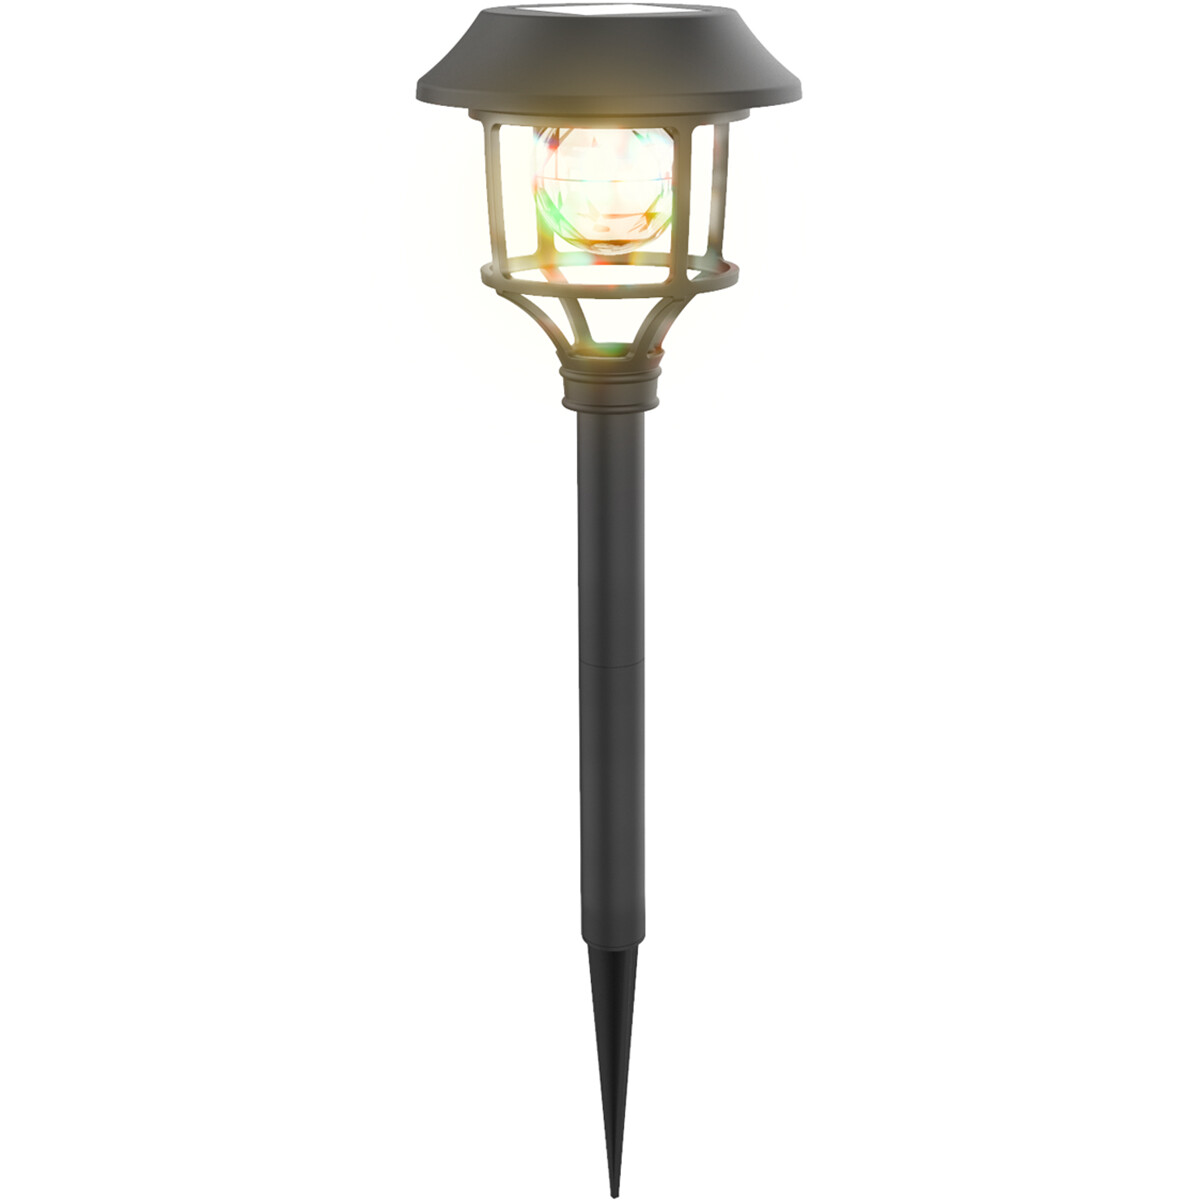 LED Priklamp met Zonne-energie - 4 Stuks - Aigi Haki - 0.08W - RGB - Mat Zwart - Kunststof Top Merken Winkel